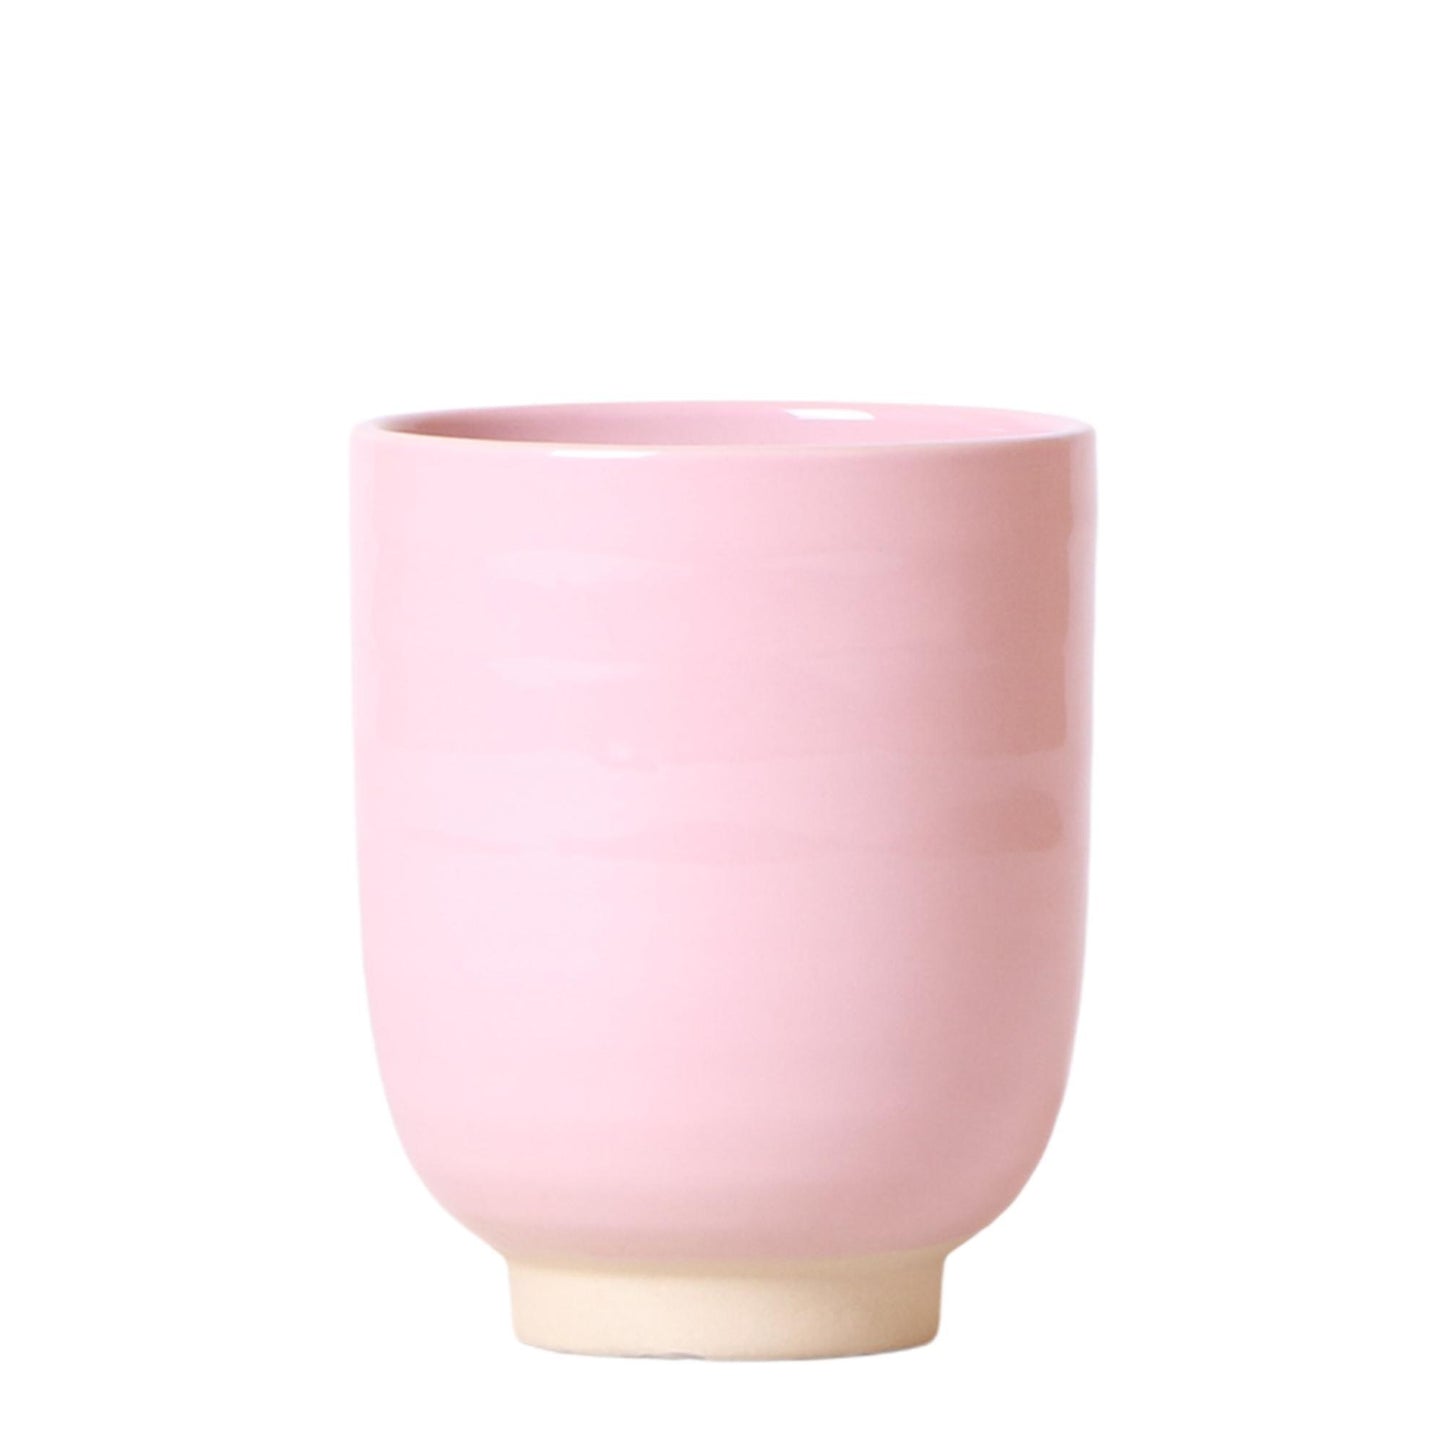 Hummingbird Home | Glazed flower pot - Pink ceramic ornamental pot with gloss - pot size Ø9cm